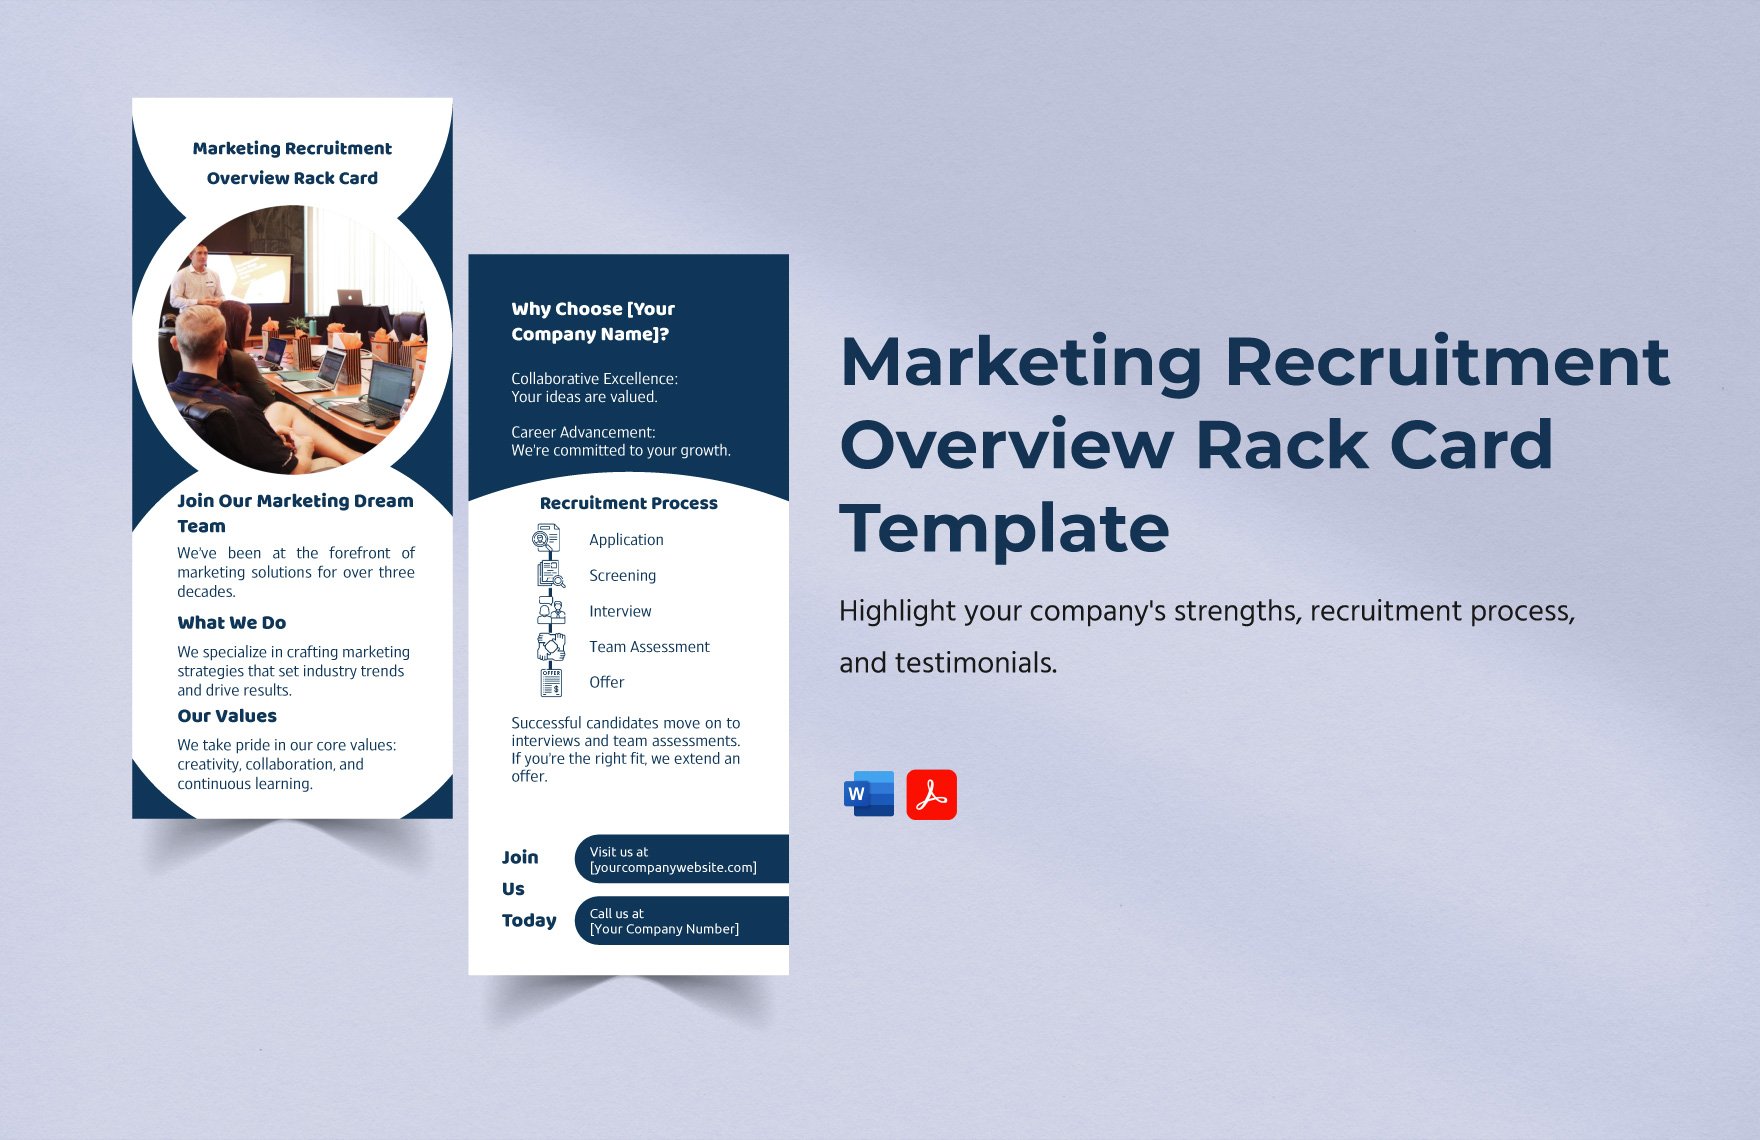 Marketing Recruitment Overview Rack Card Template